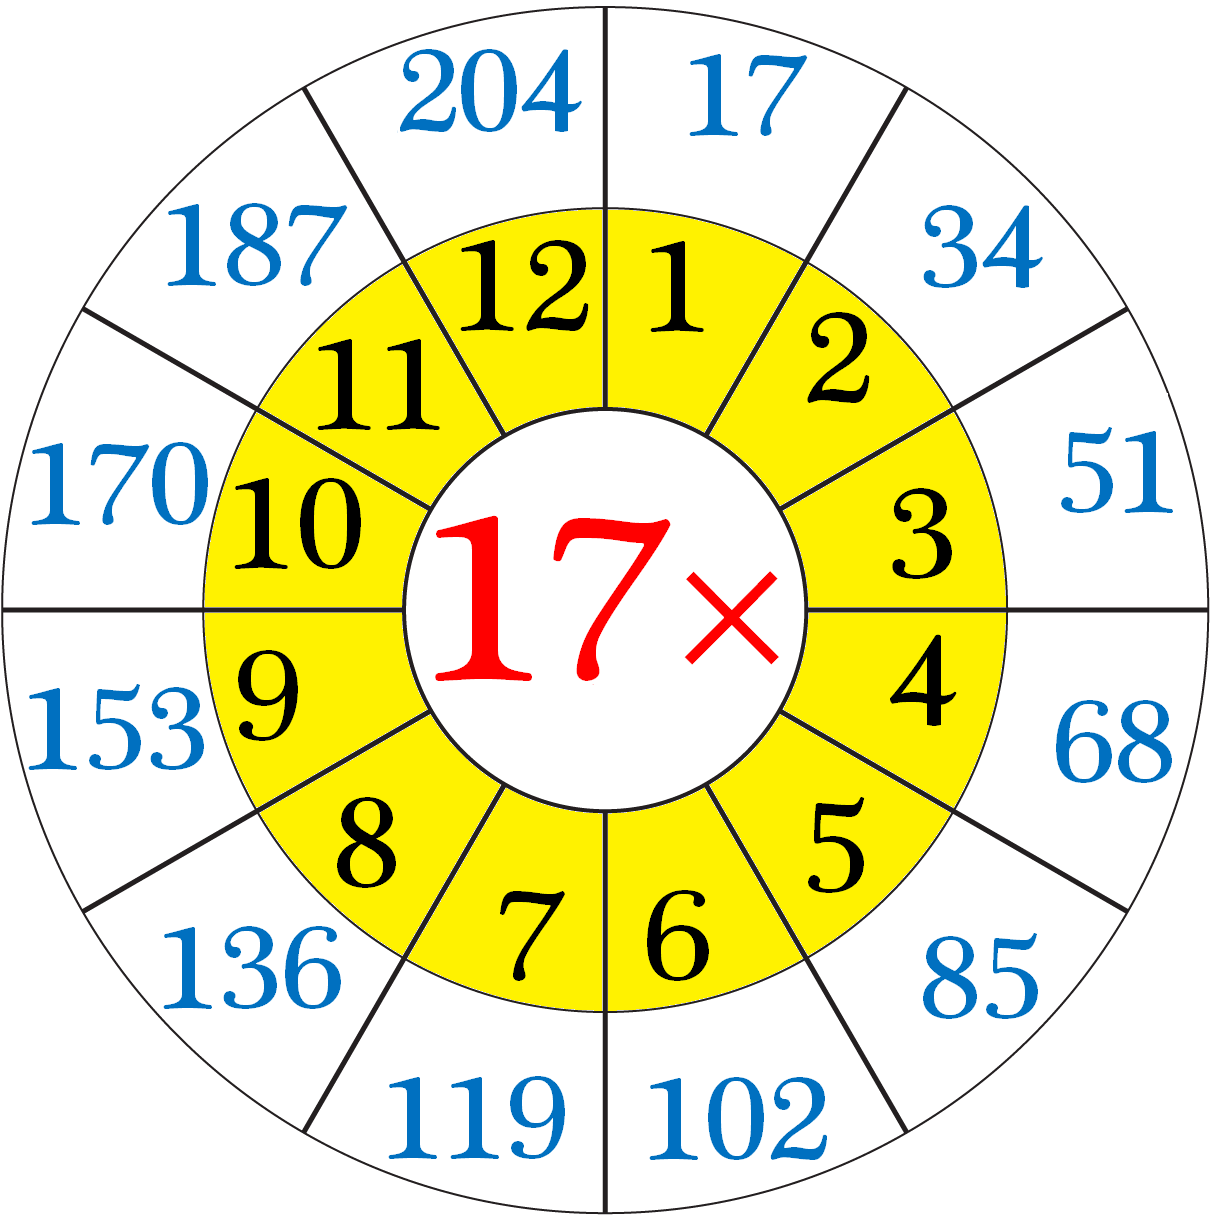 Multiplication Table of Seventeen